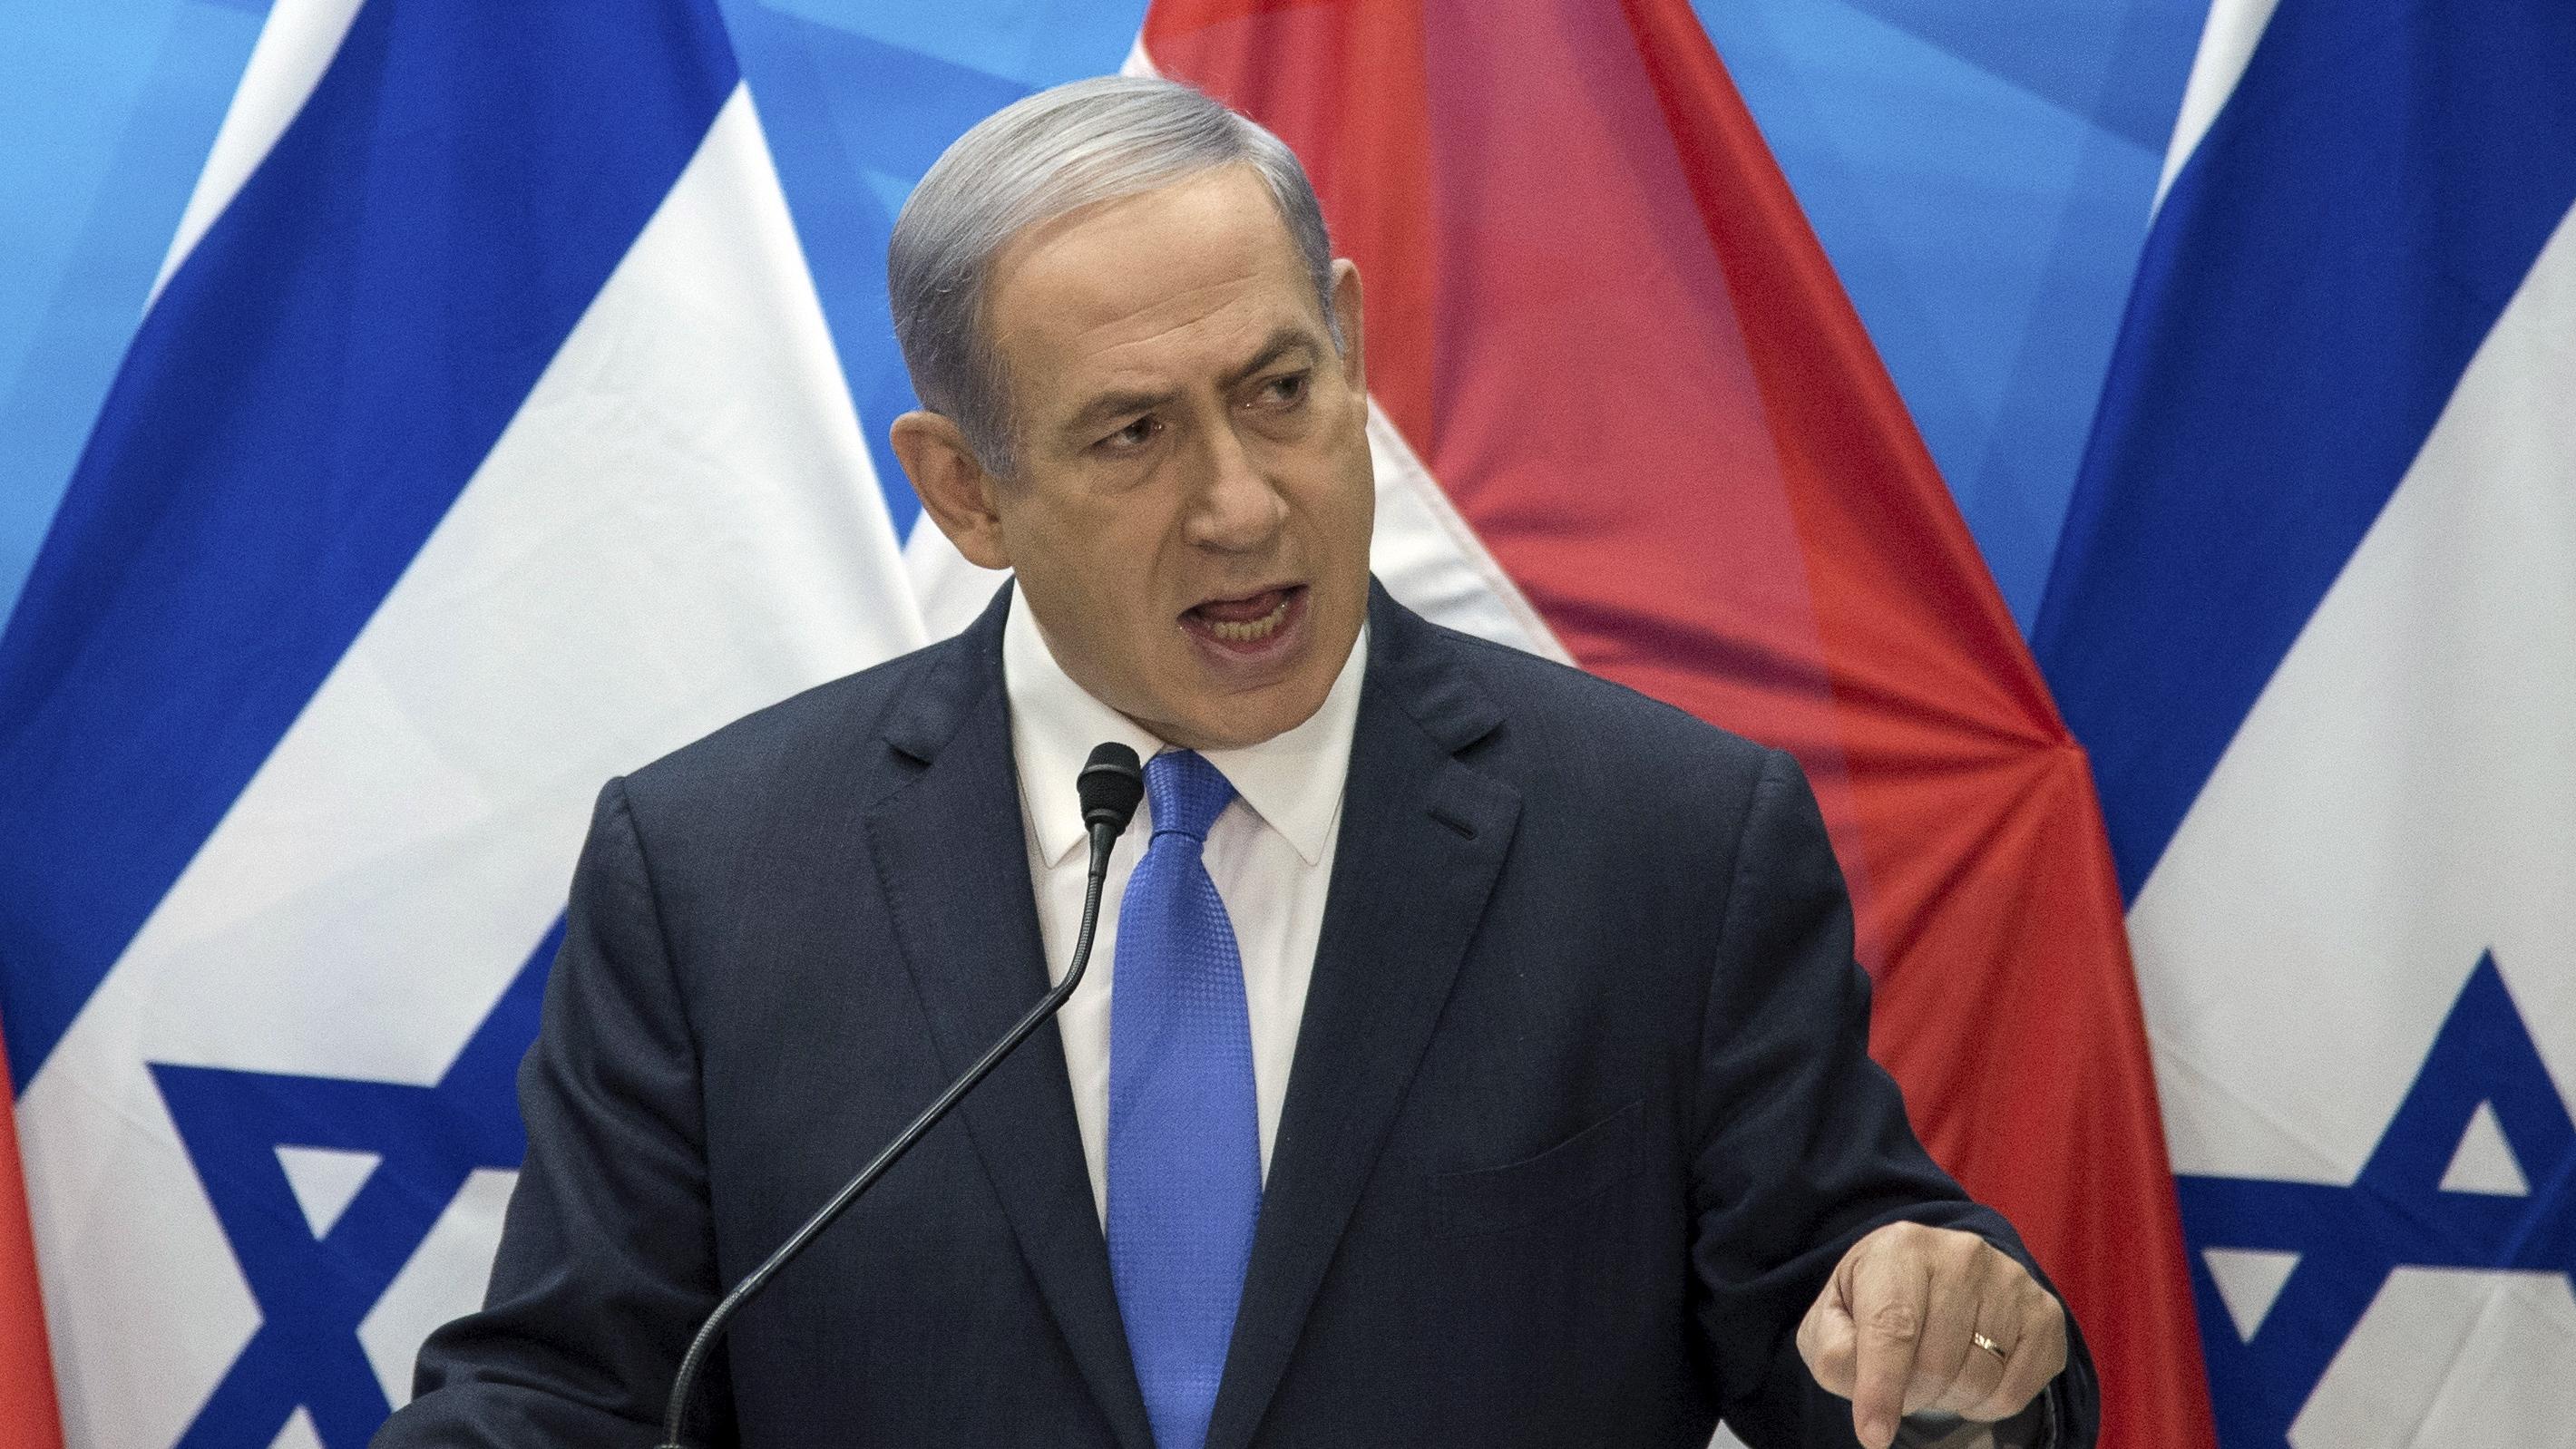 Israel's prime minister Benjamin Netanyahu delivers joint statements to the media in Jerusalem July 14, 2015.